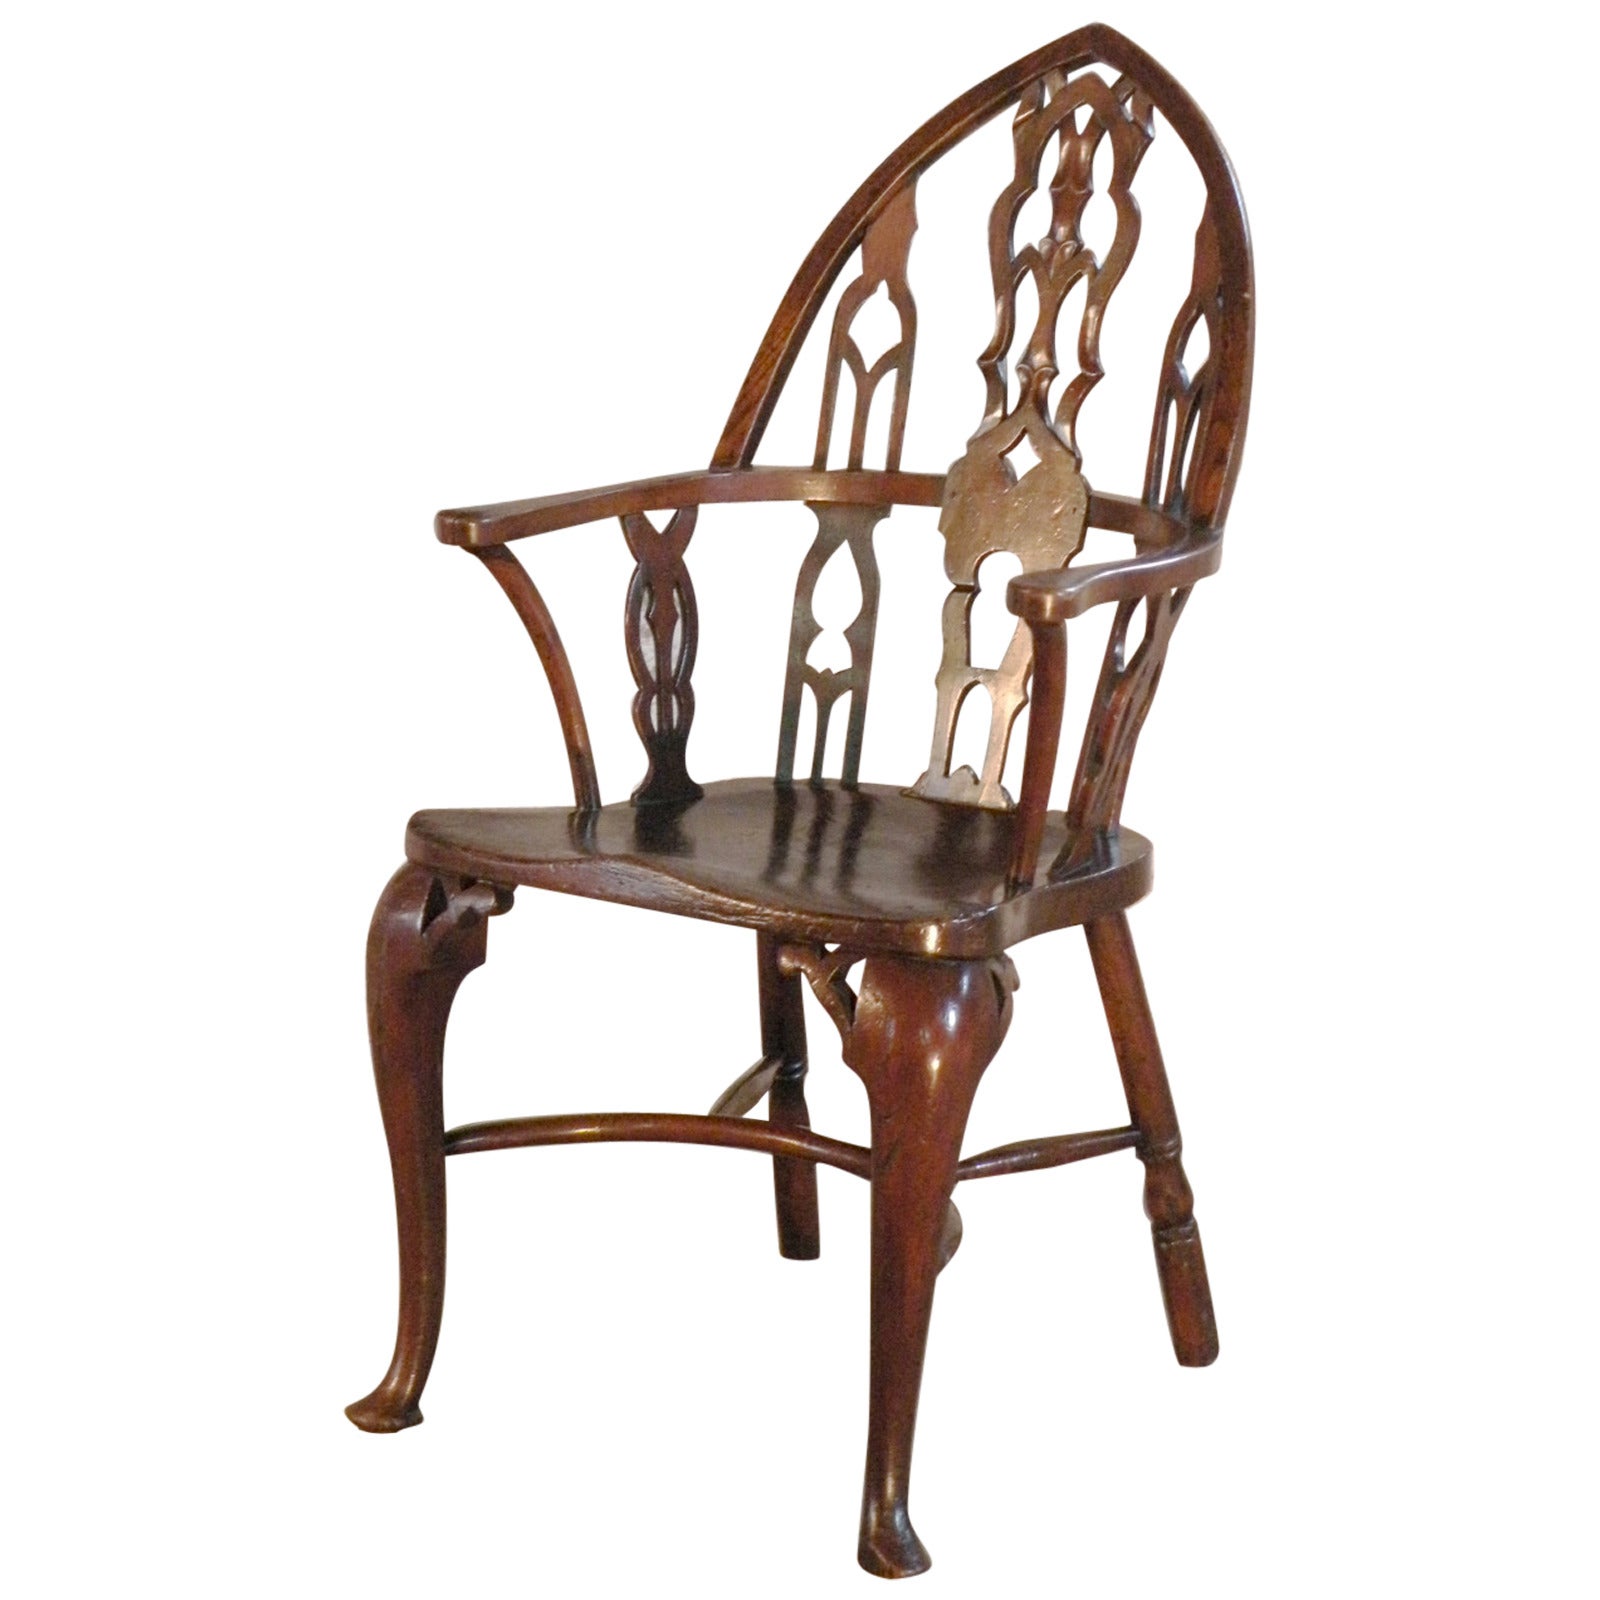  English 19th century George III “Gothick” Yew wood Windsor Chair